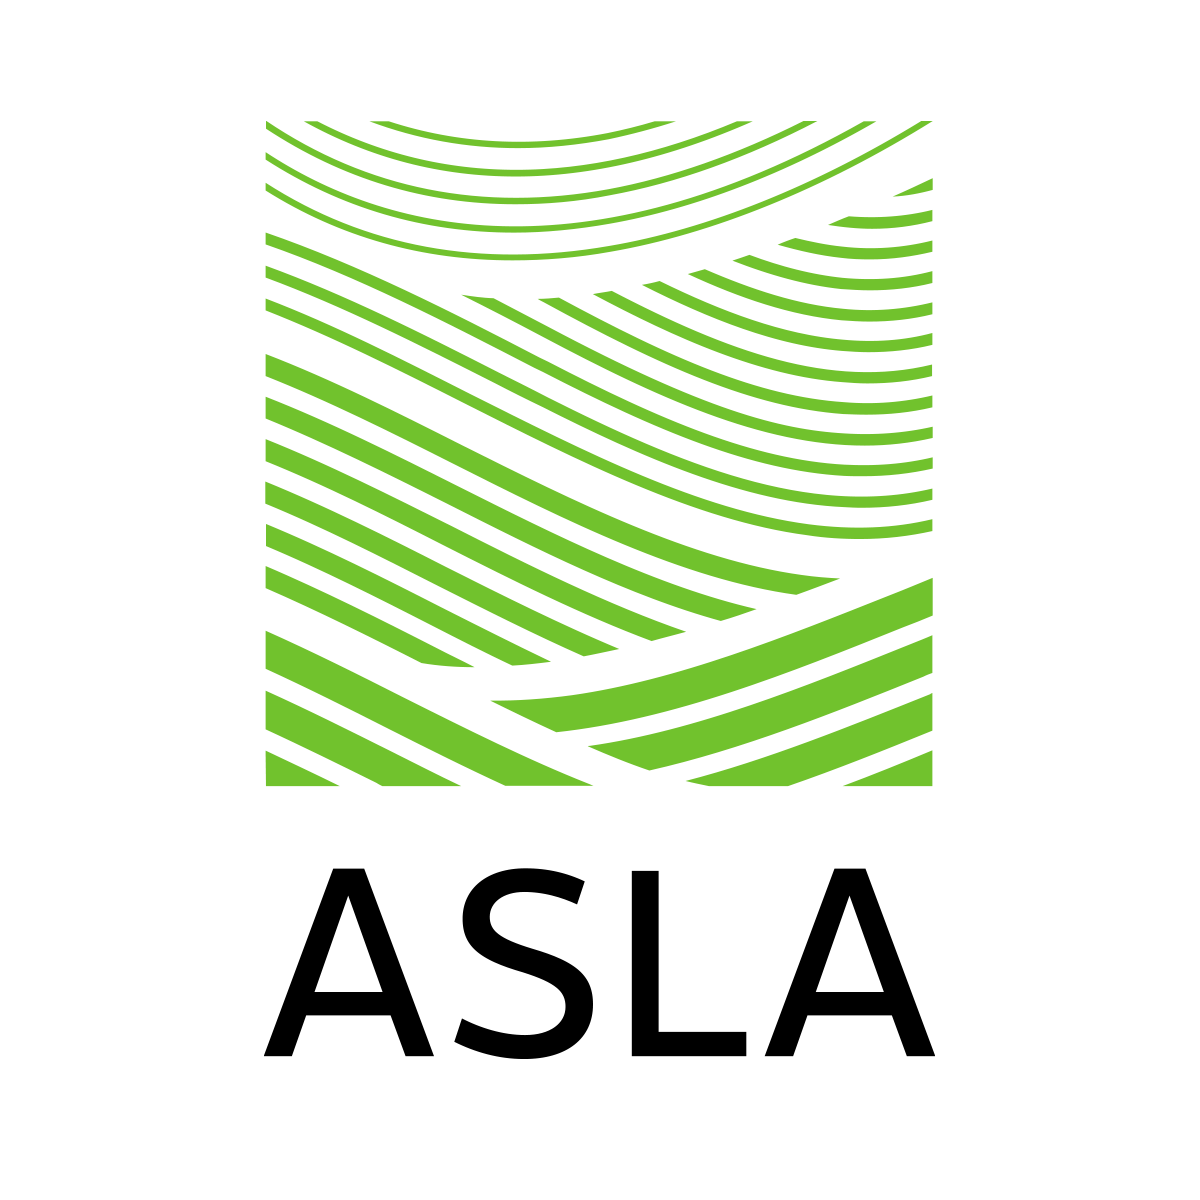 American Society of Landscape Architects (ASLA) logo